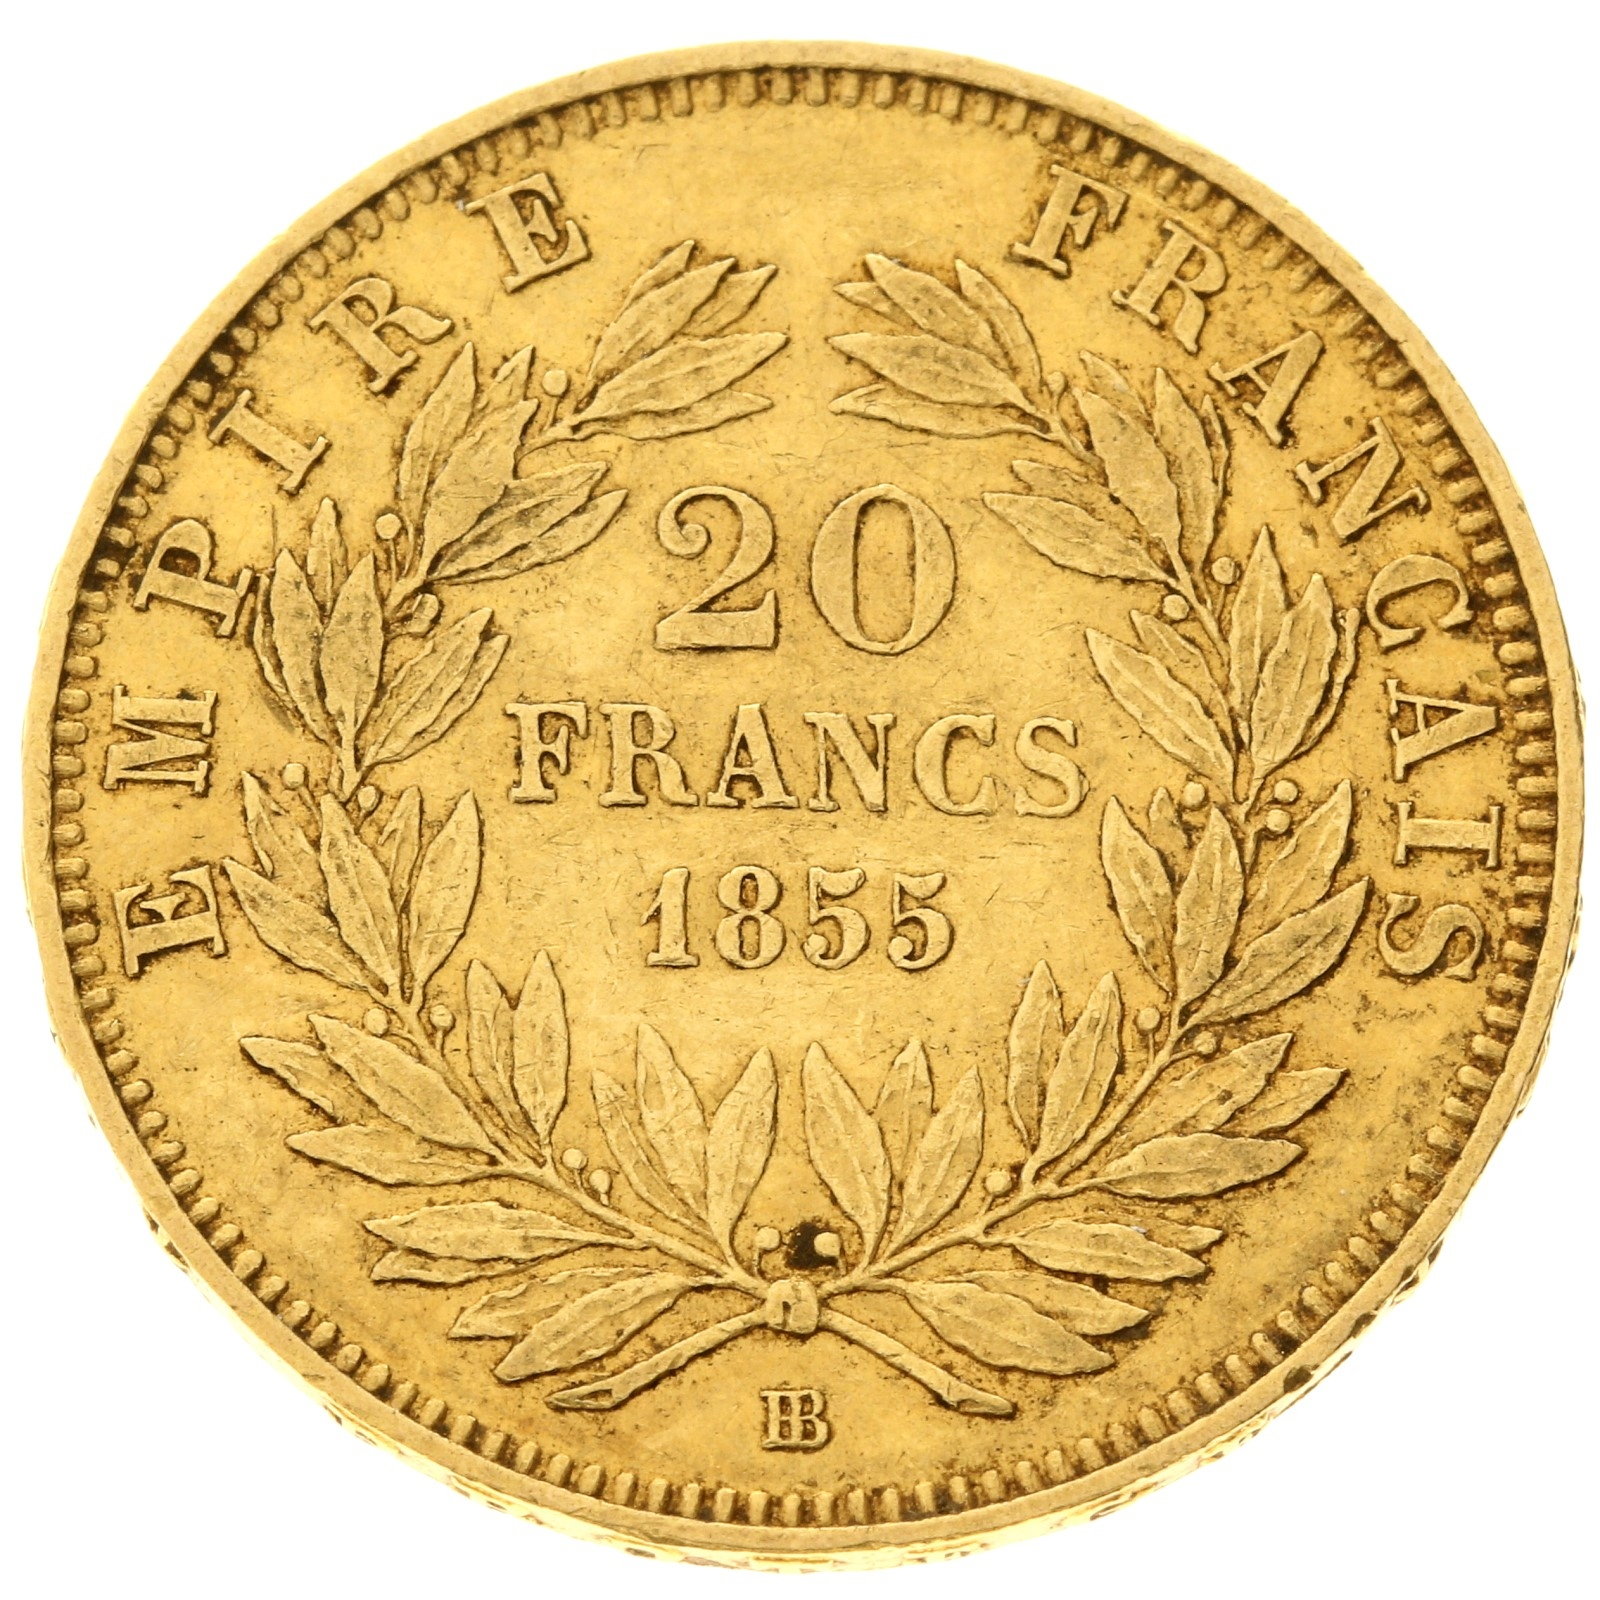 France - 20 Francs - 1855 - BB - Napoleon III